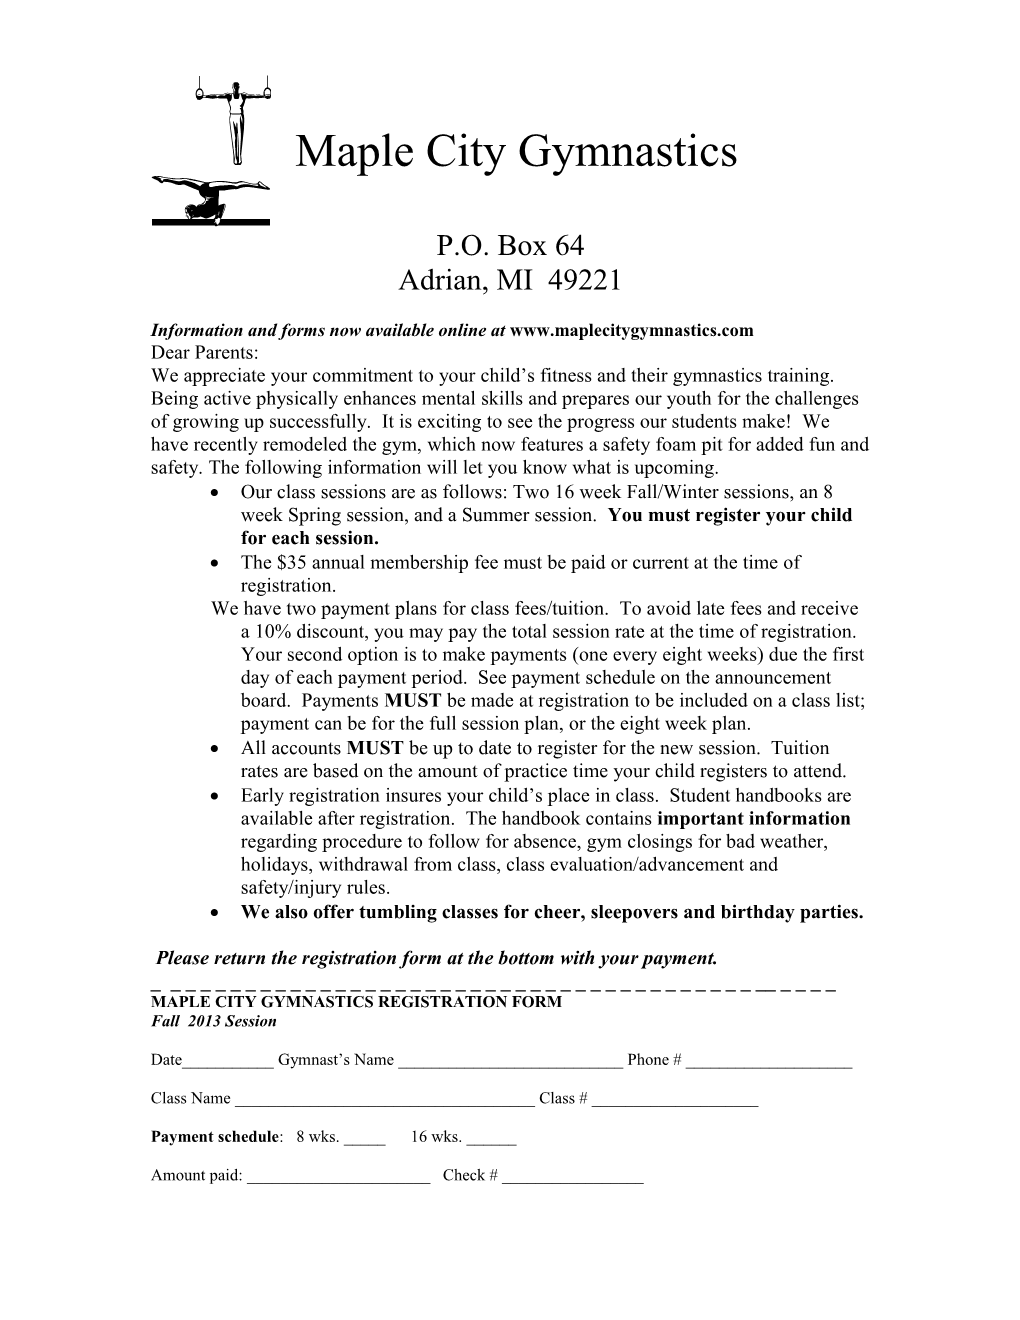 Maple City Gymnastics